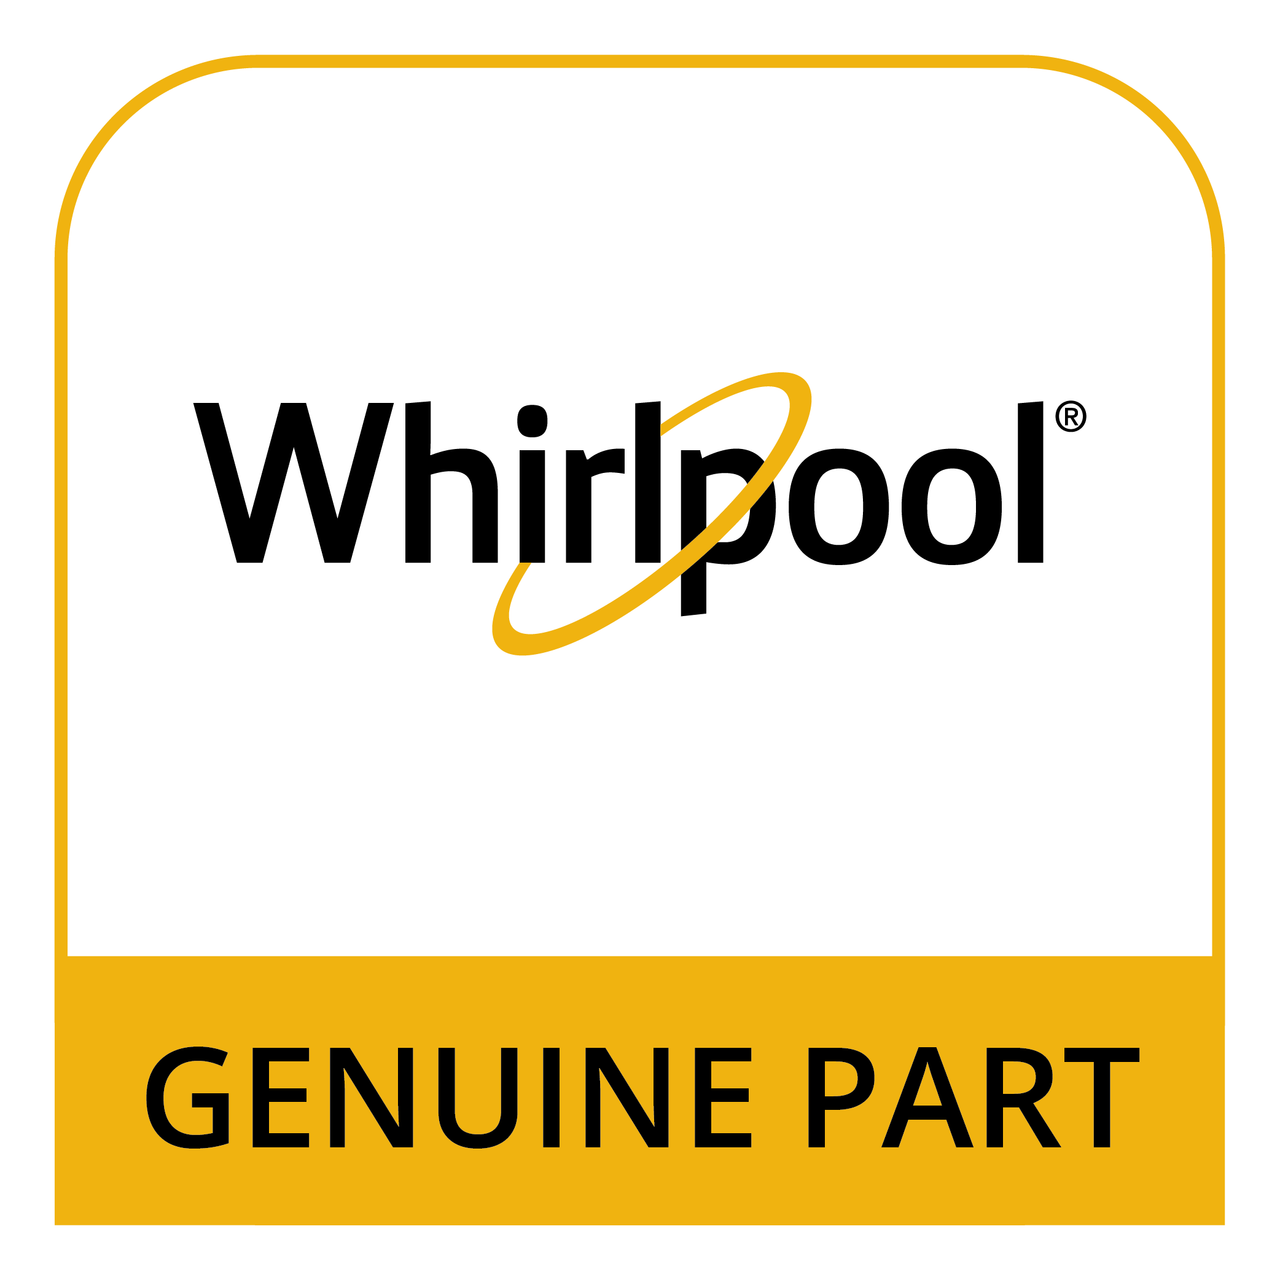 Whirlpool W10715478 - Cap-Hub - Genuine Part